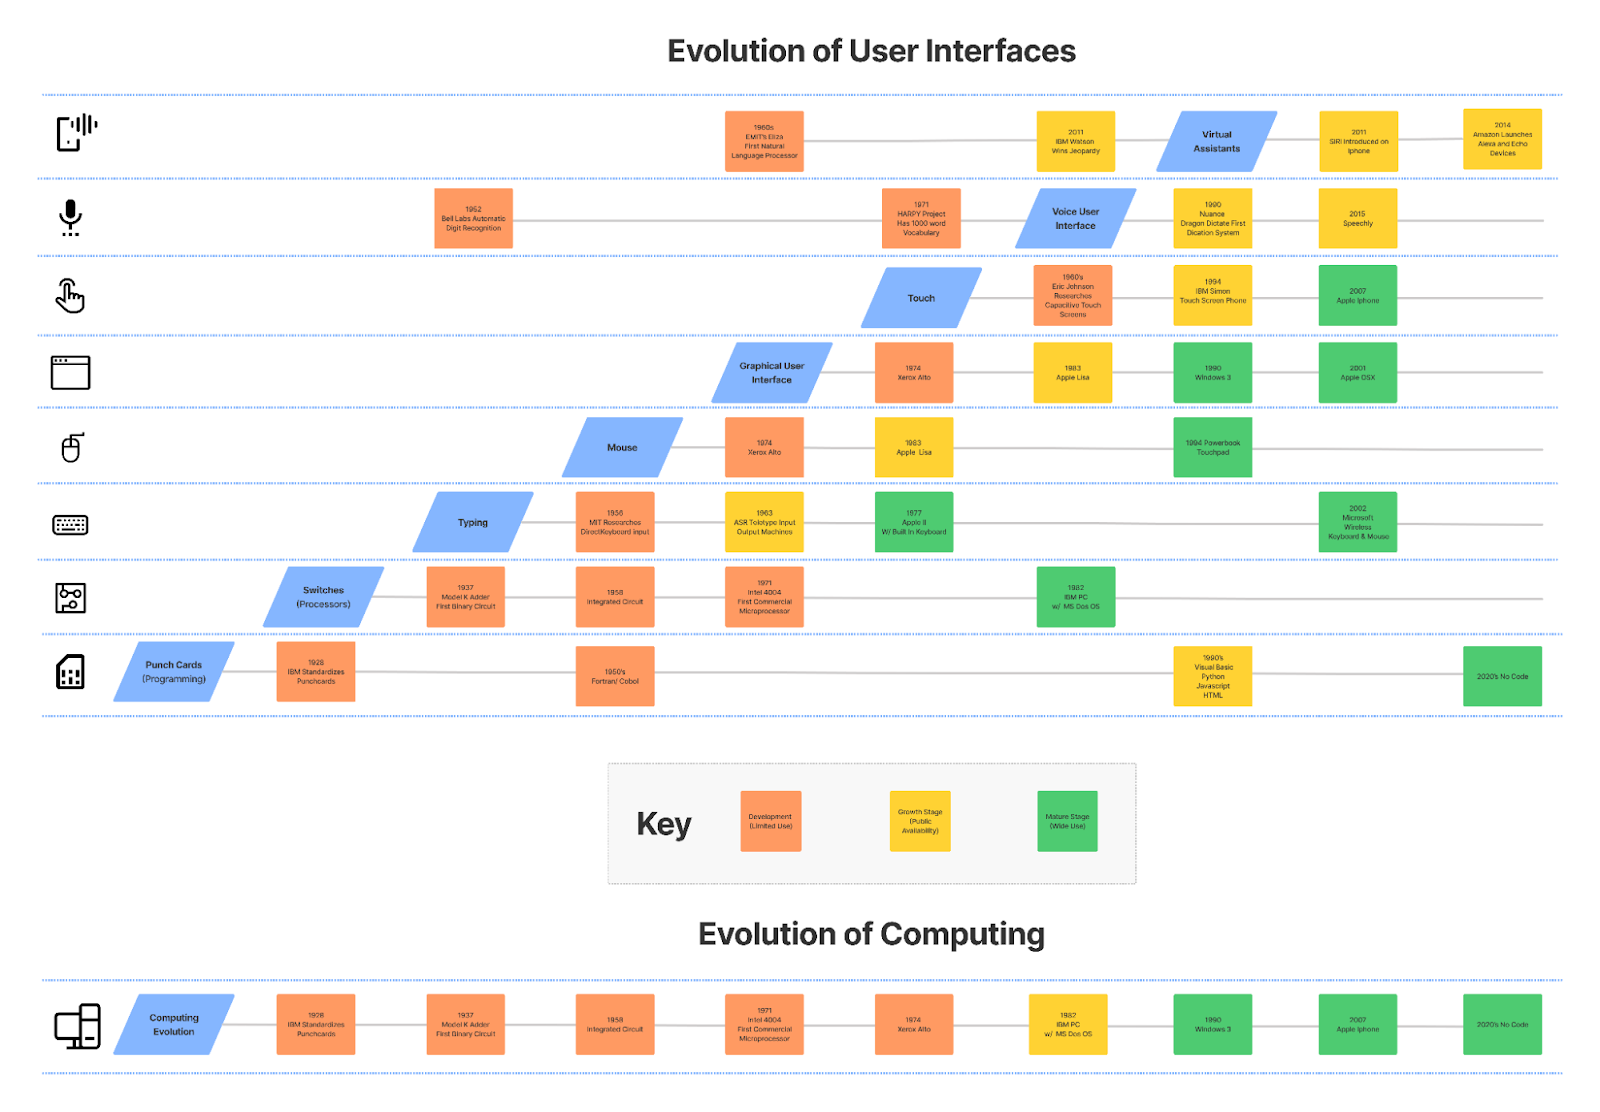 Evolution on UIs vs Computing